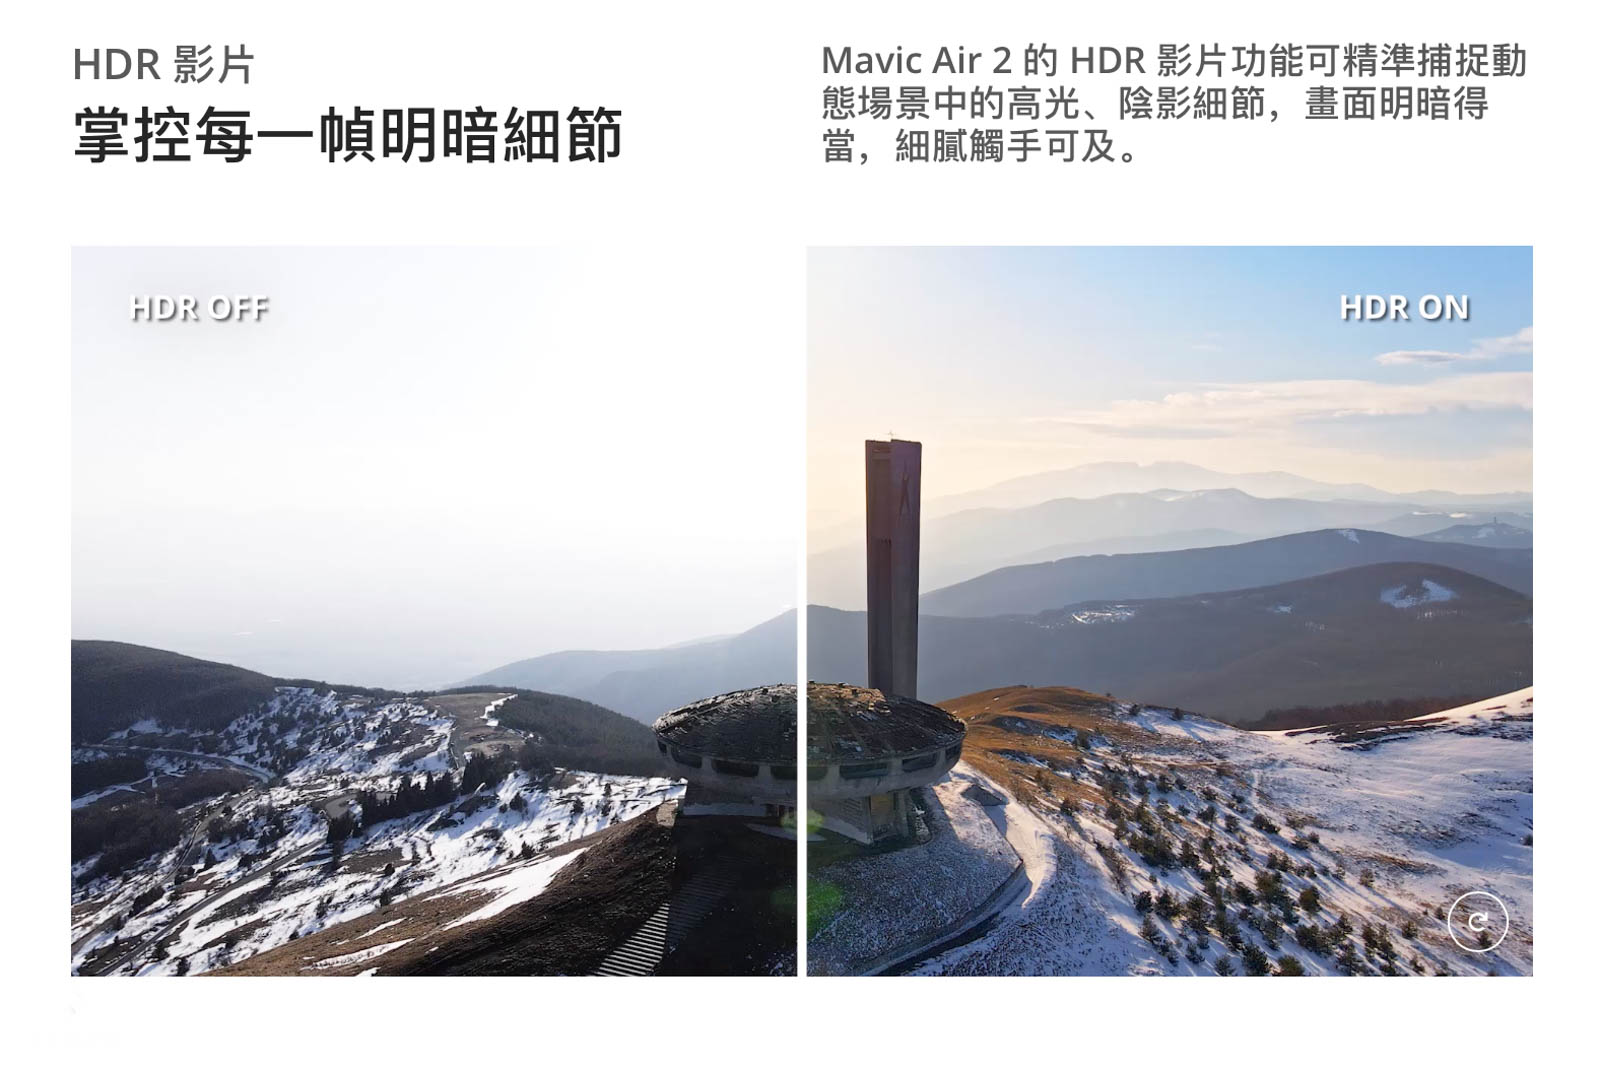 Mavic Air 2加入HDR影片功能，提供更好的動態範圍和細節表現